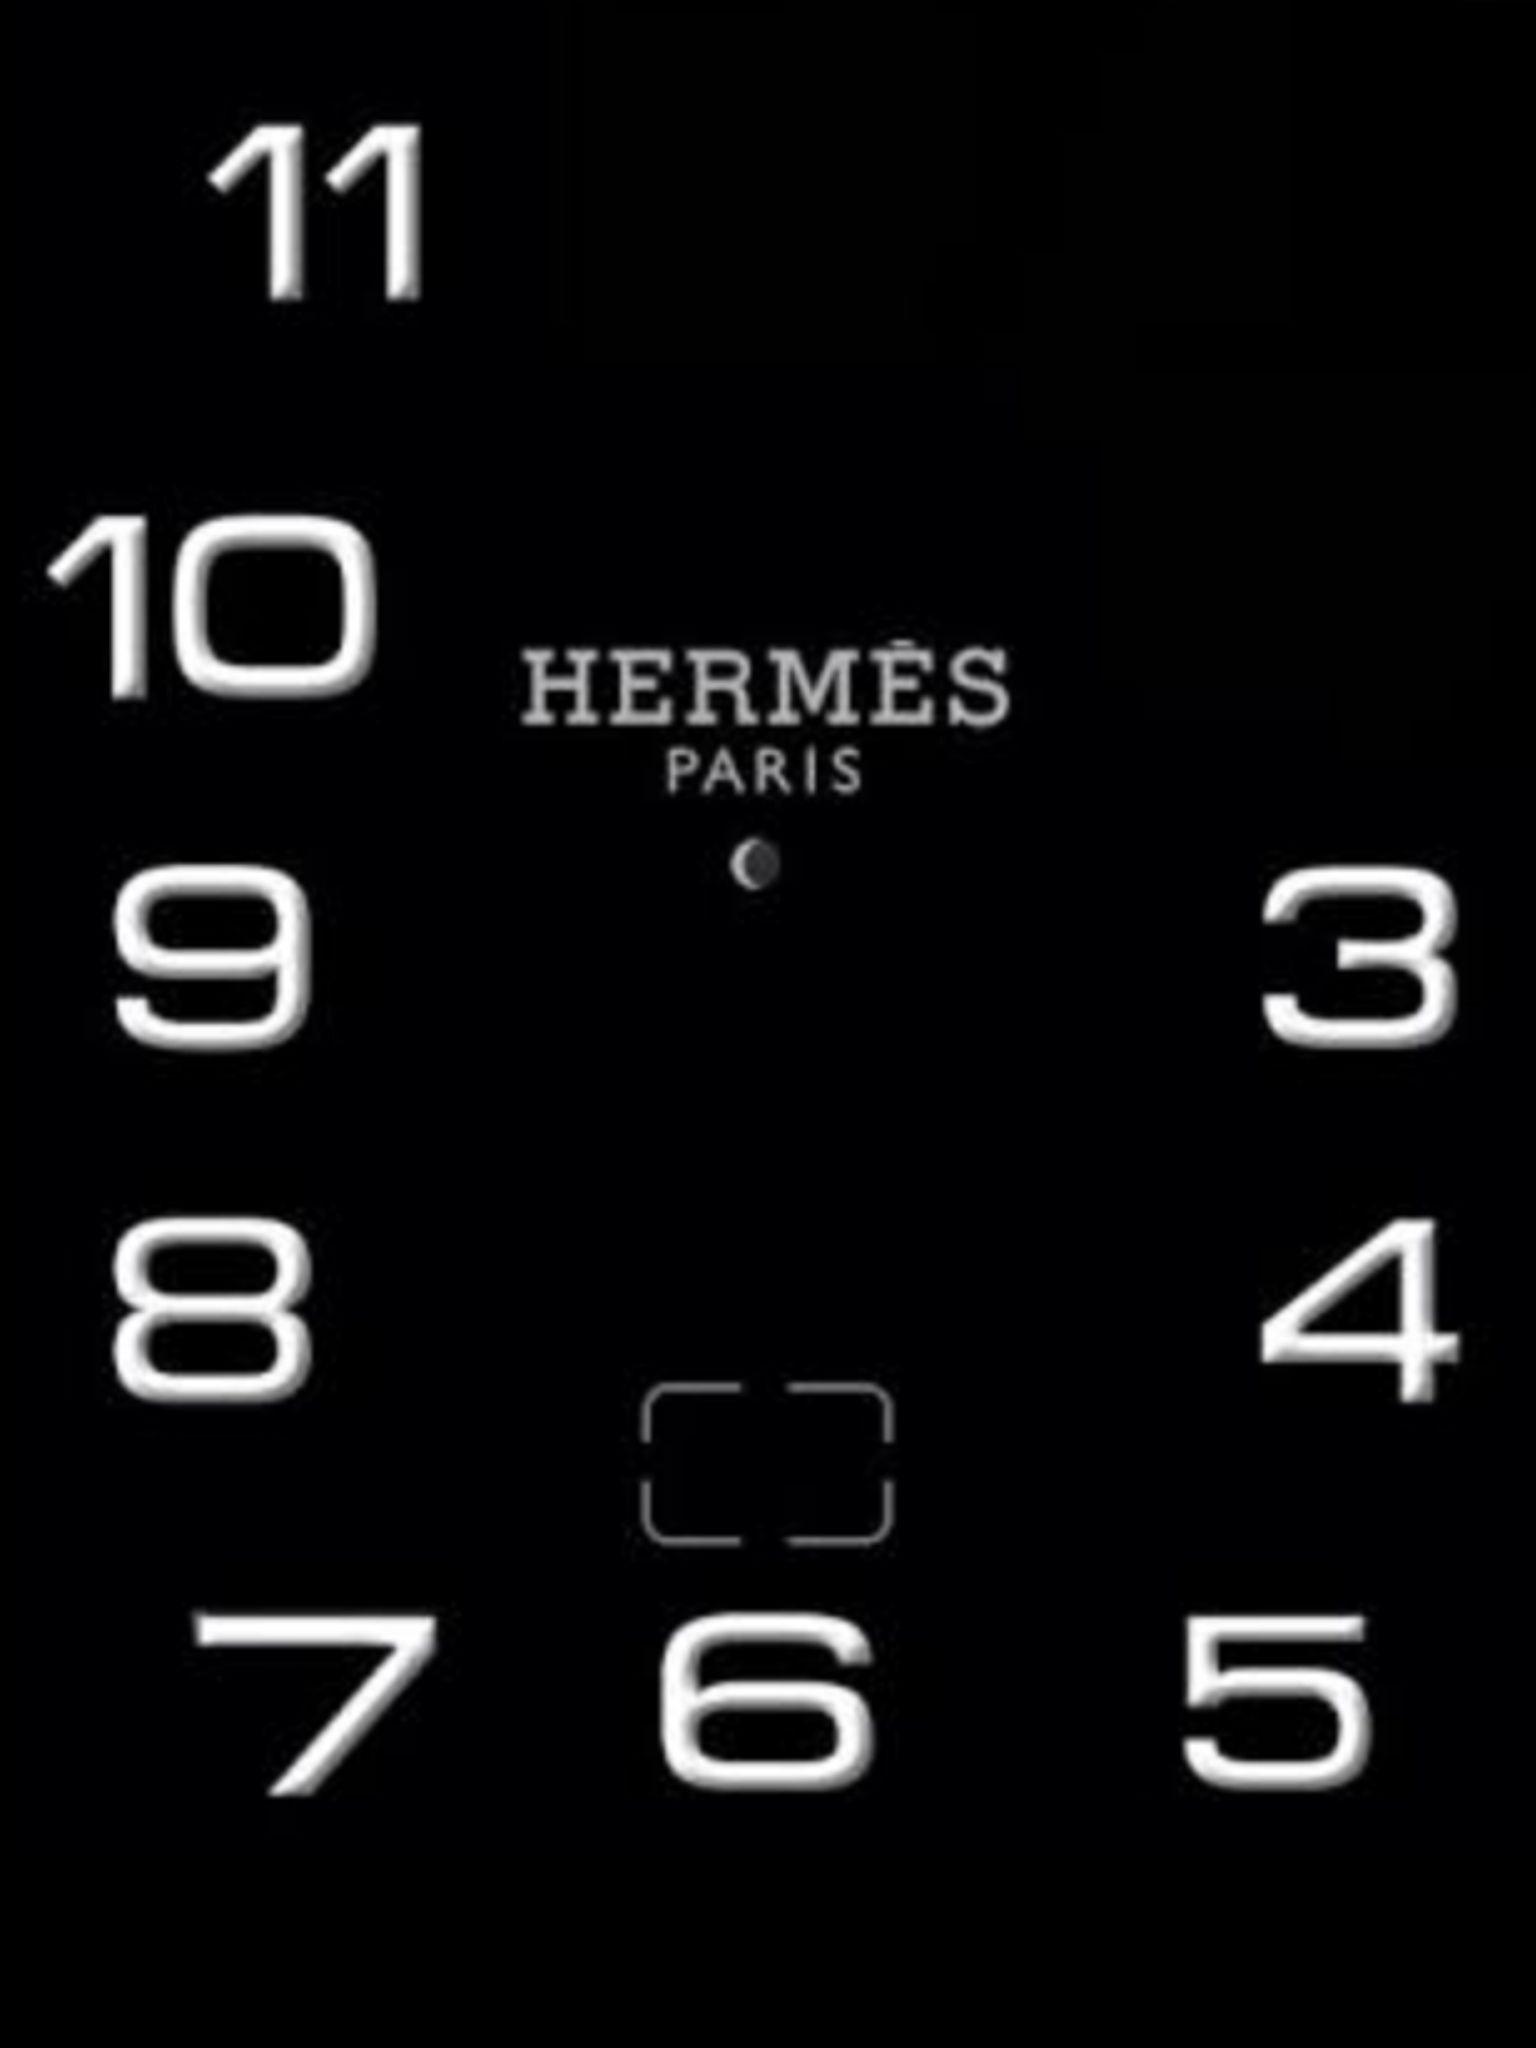 Hermes Face On Apple Watch Wallpaper Download